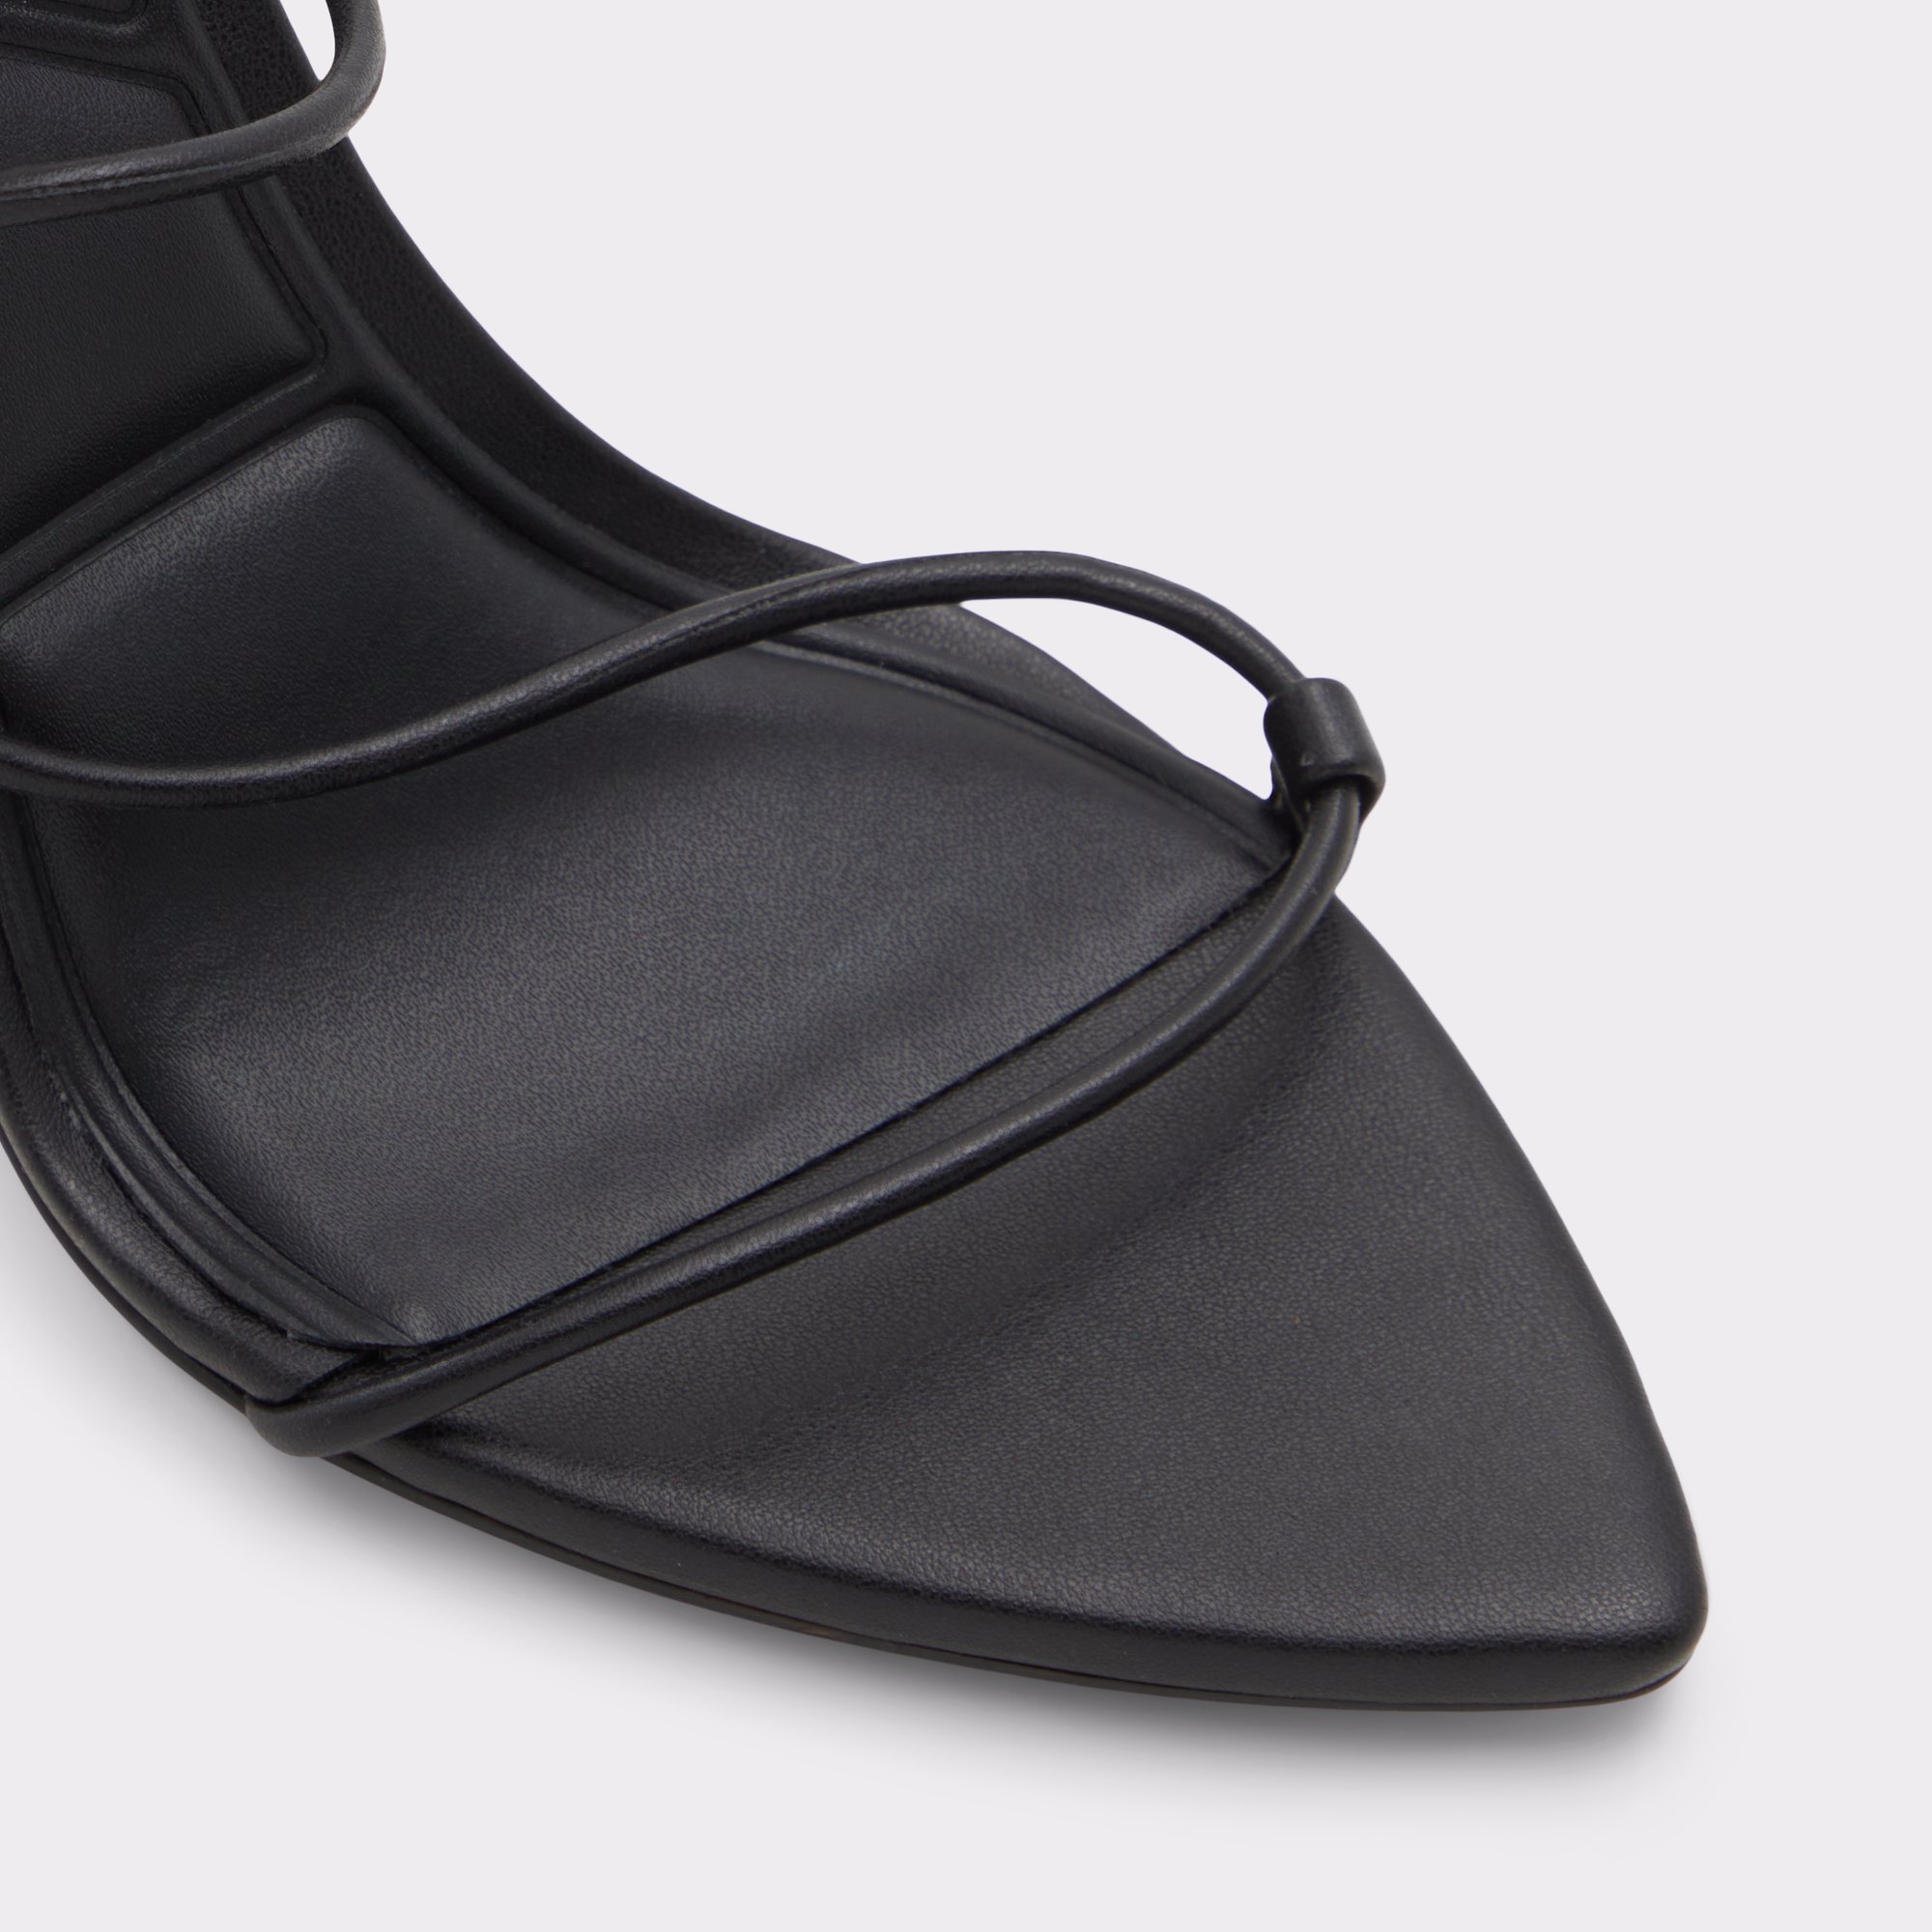 Melodic Black Women's Heeled sandals | ALDO Canada